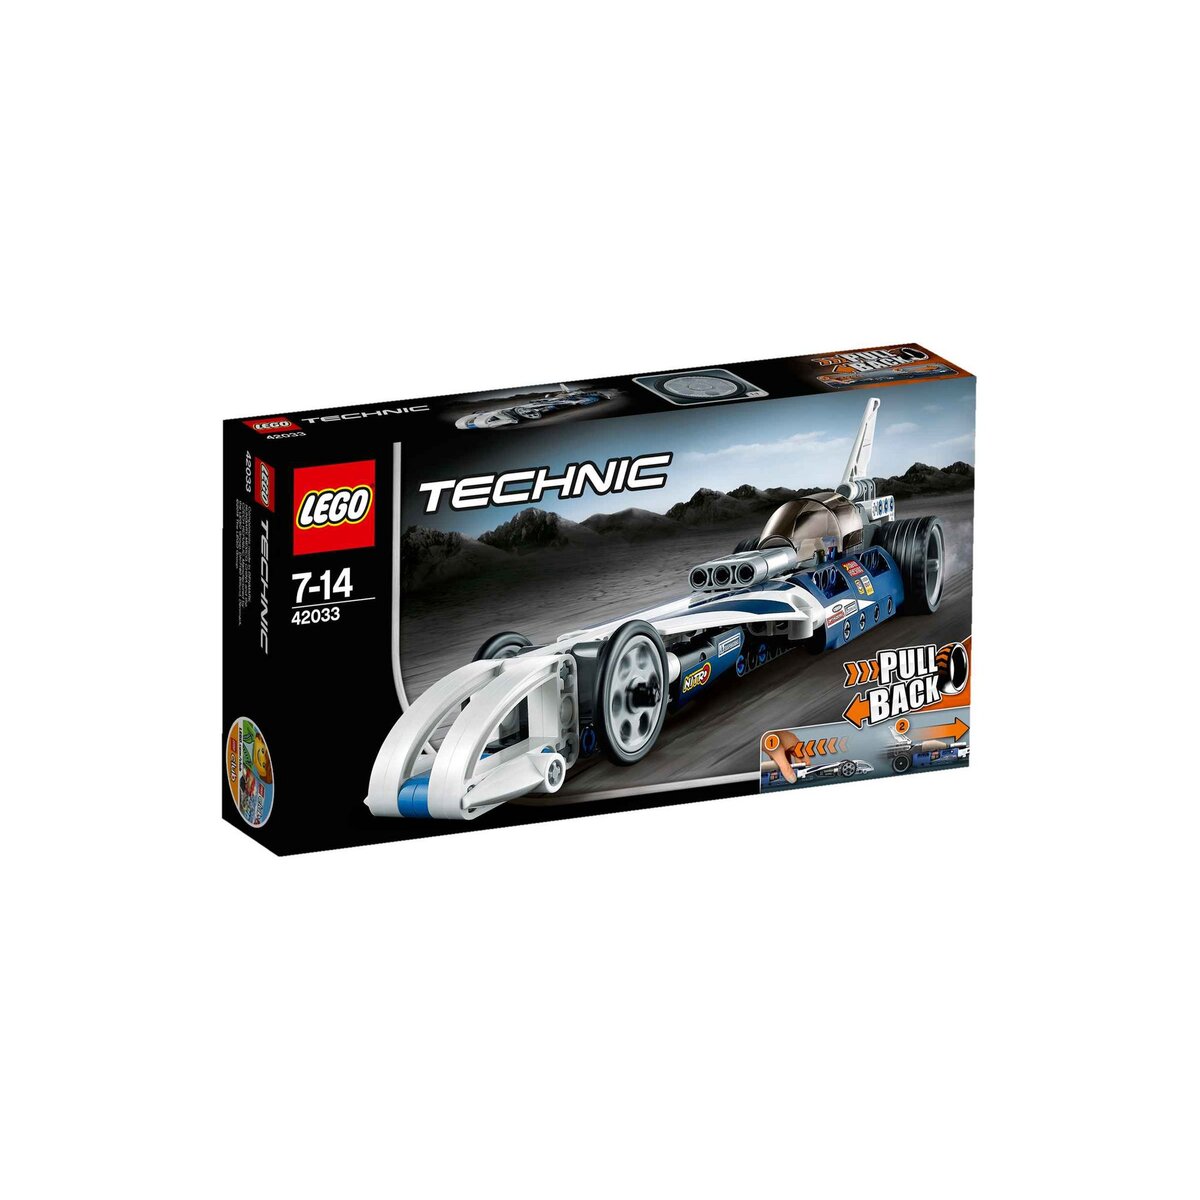 LEGO Technic 42033 - Le bolide imbattable